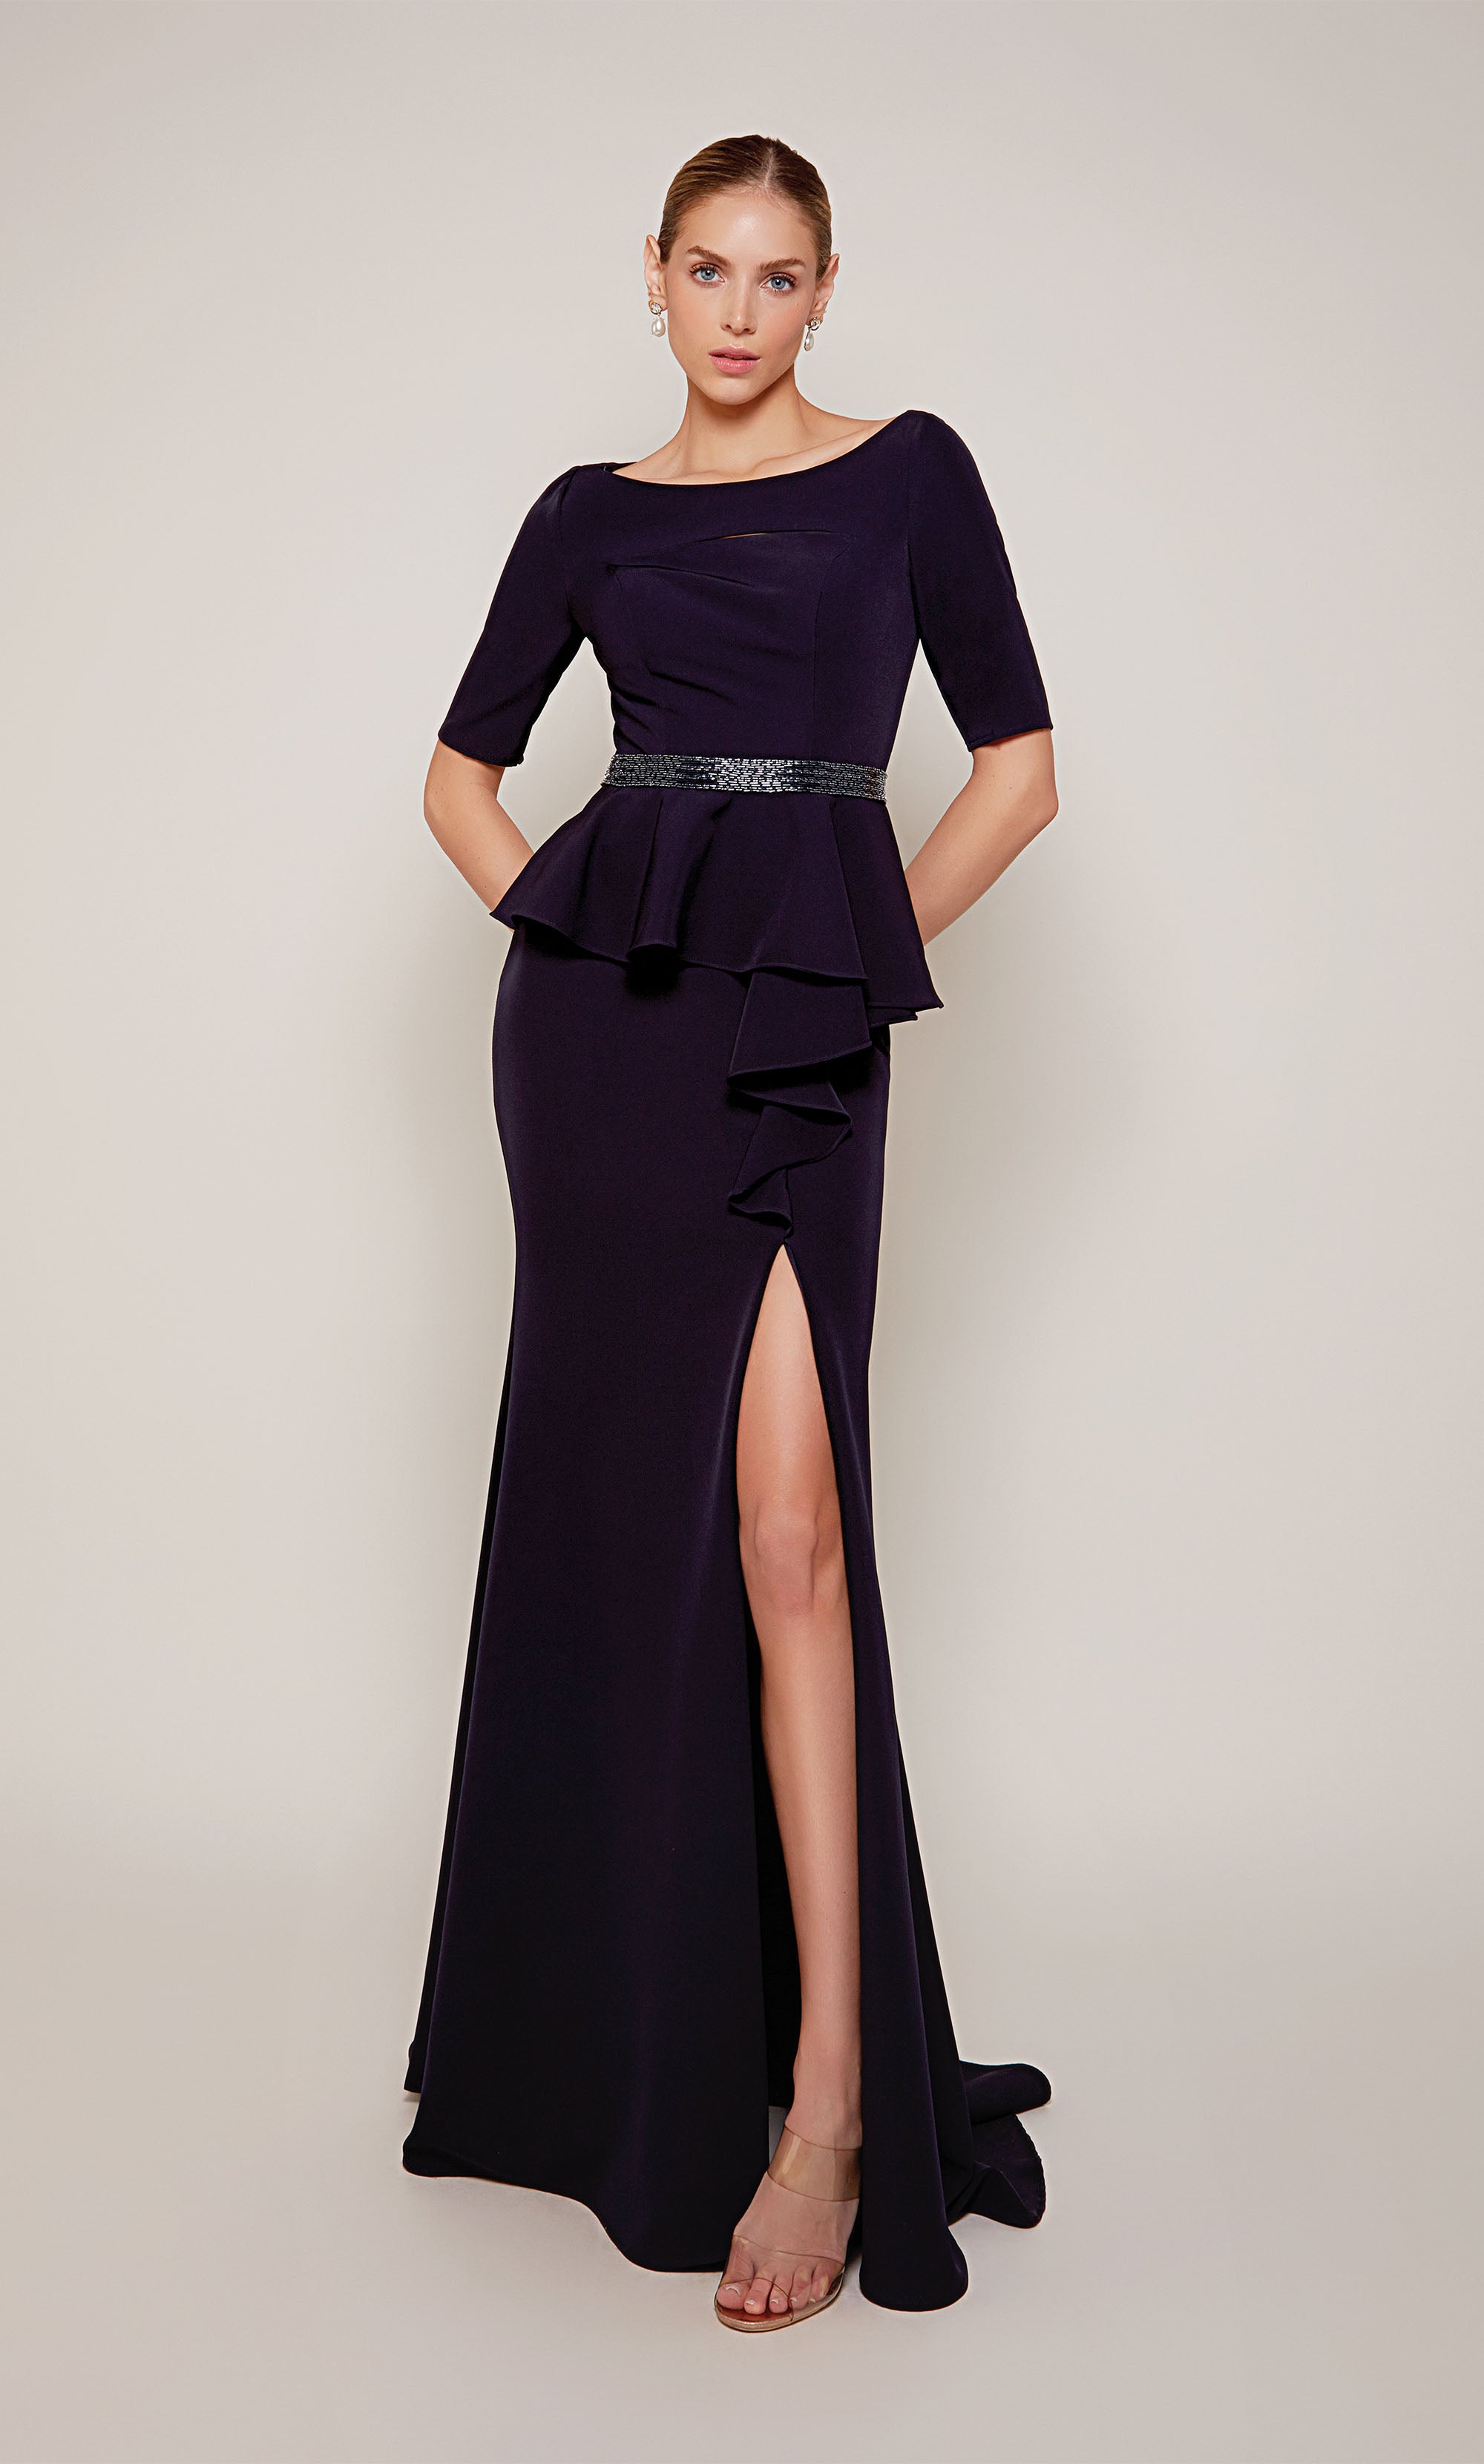 Lilla P Peplum Dress in Black – CoatTails